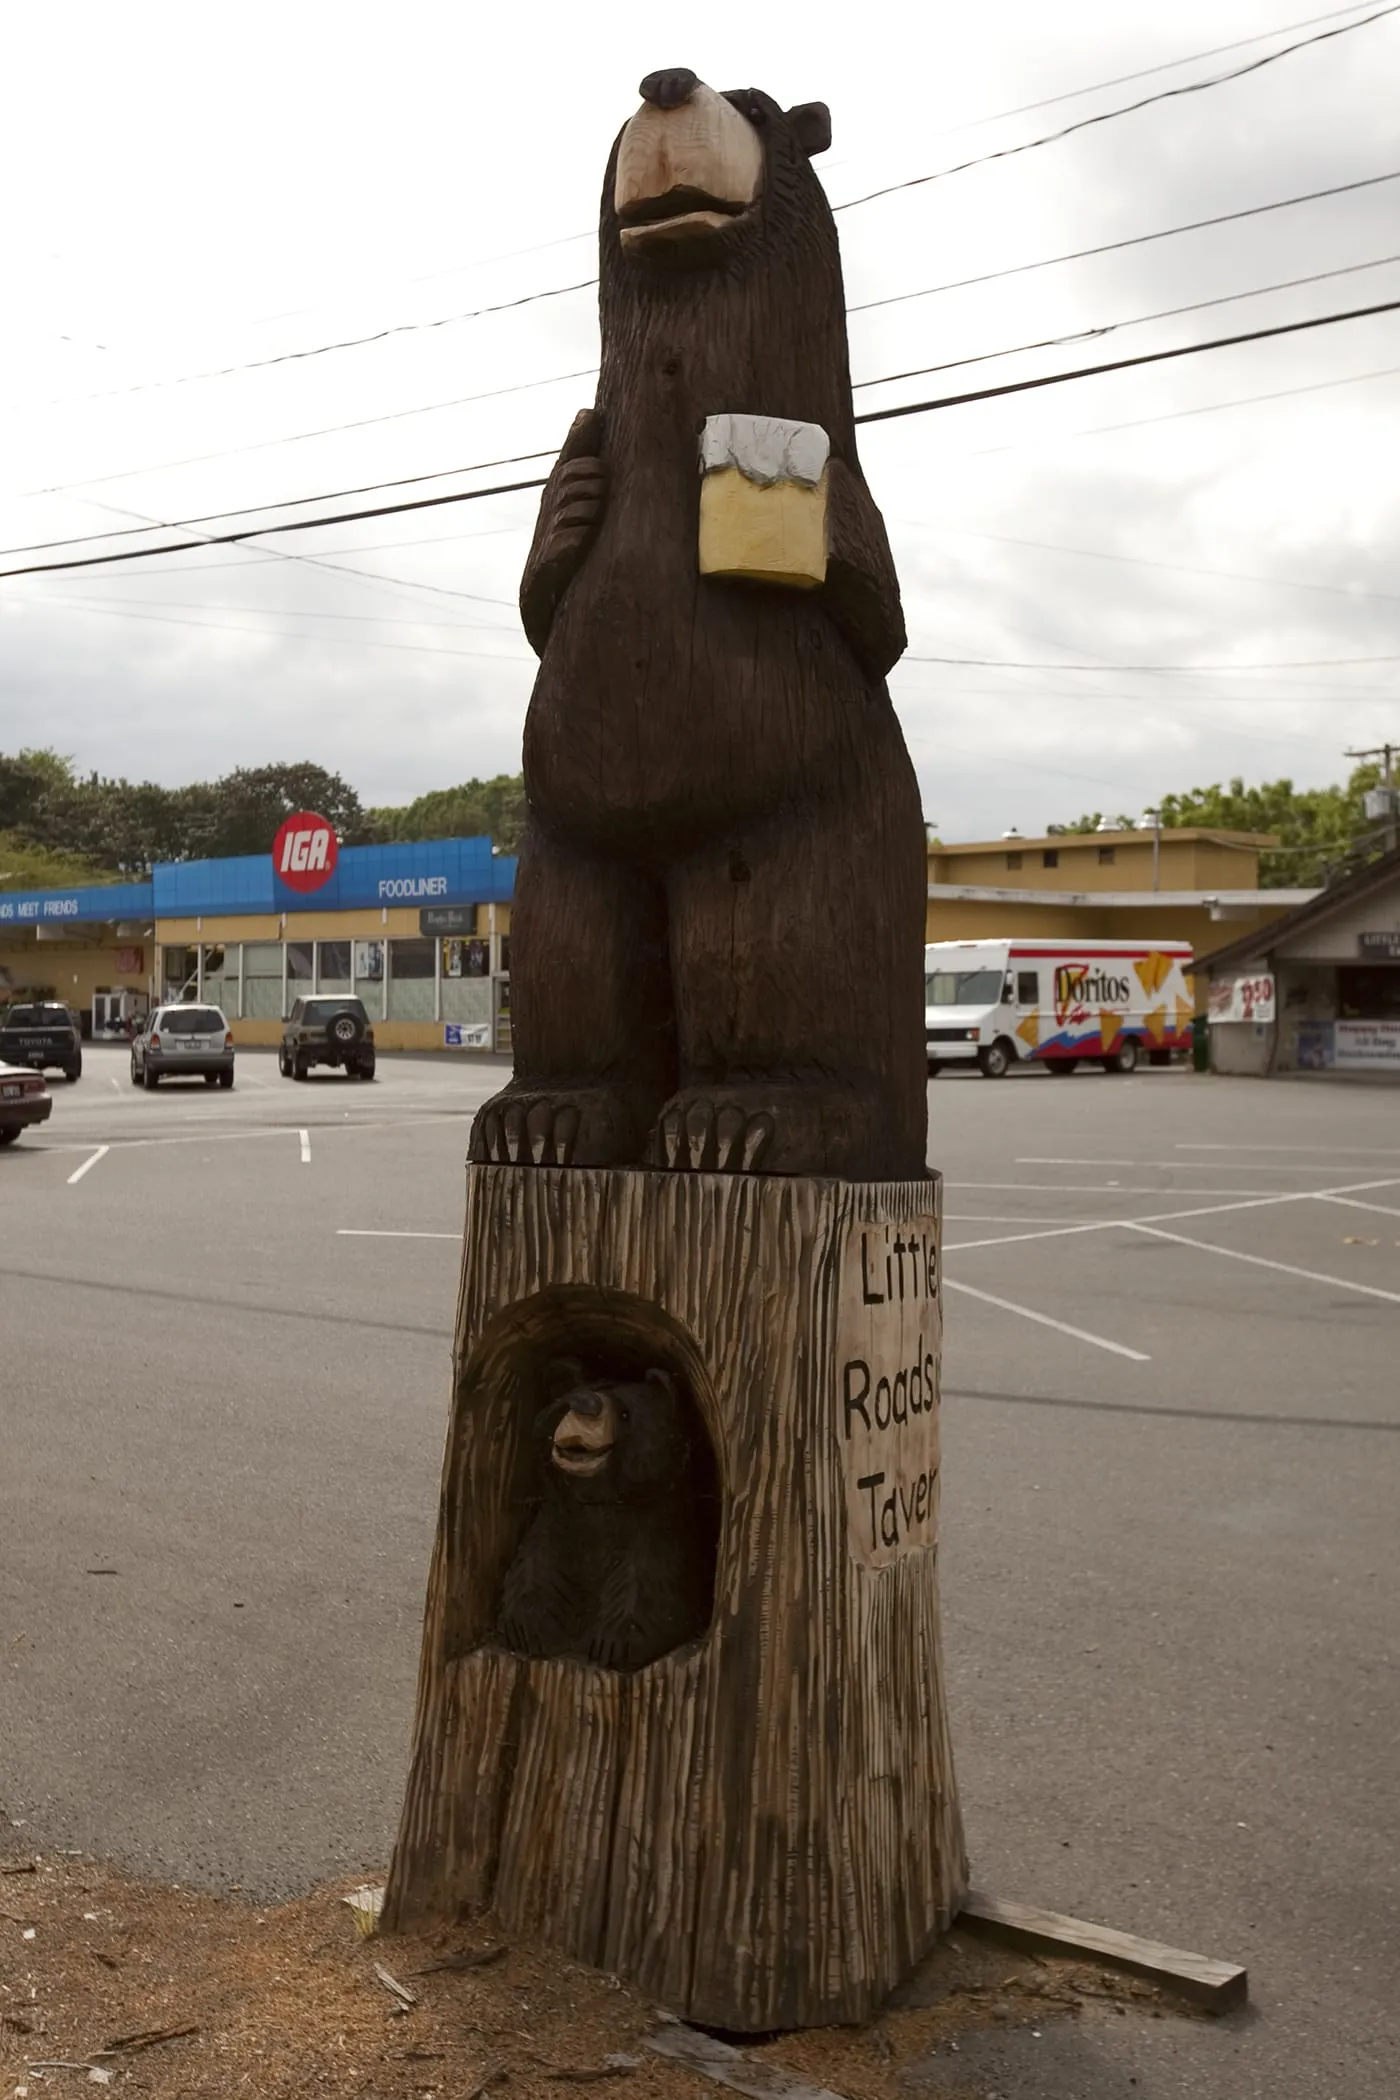 Little Roadside Tavern Bear in Everson, Washington - Carved bear roadside attraction outside of the Little Roadside Tavern in Everson, Washington.